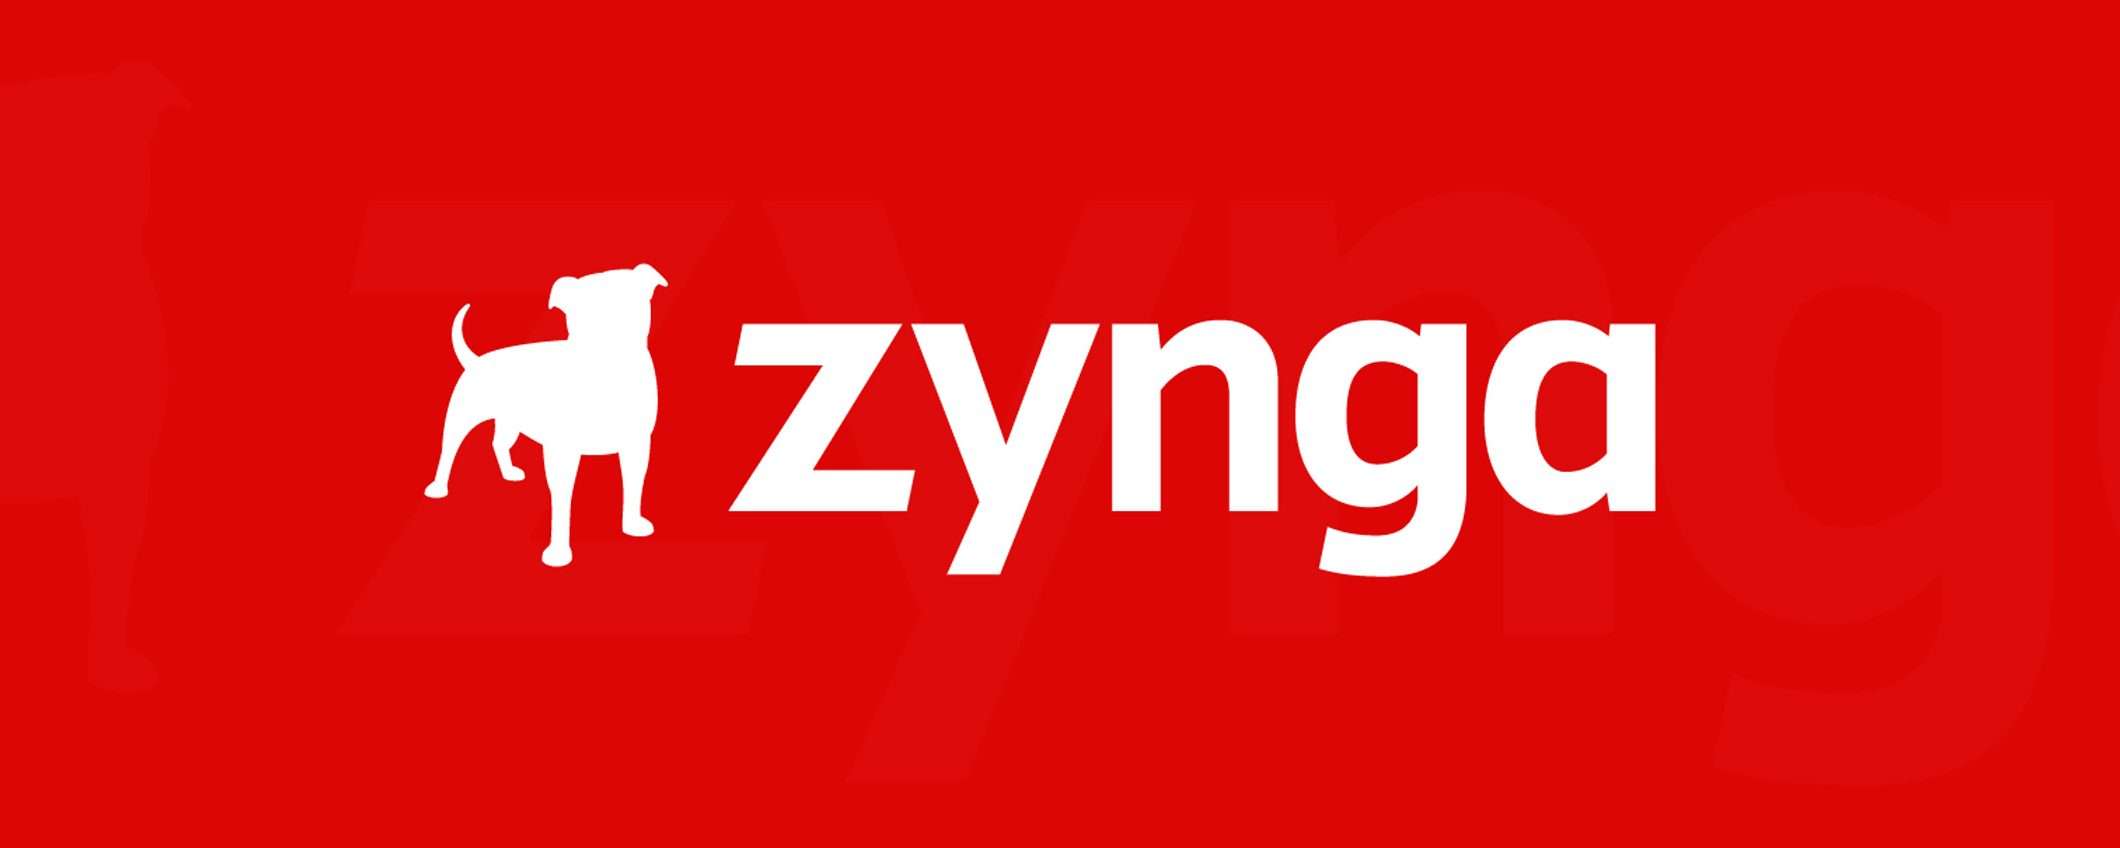 Take-Two compra Zynga e punta al gaming mobile